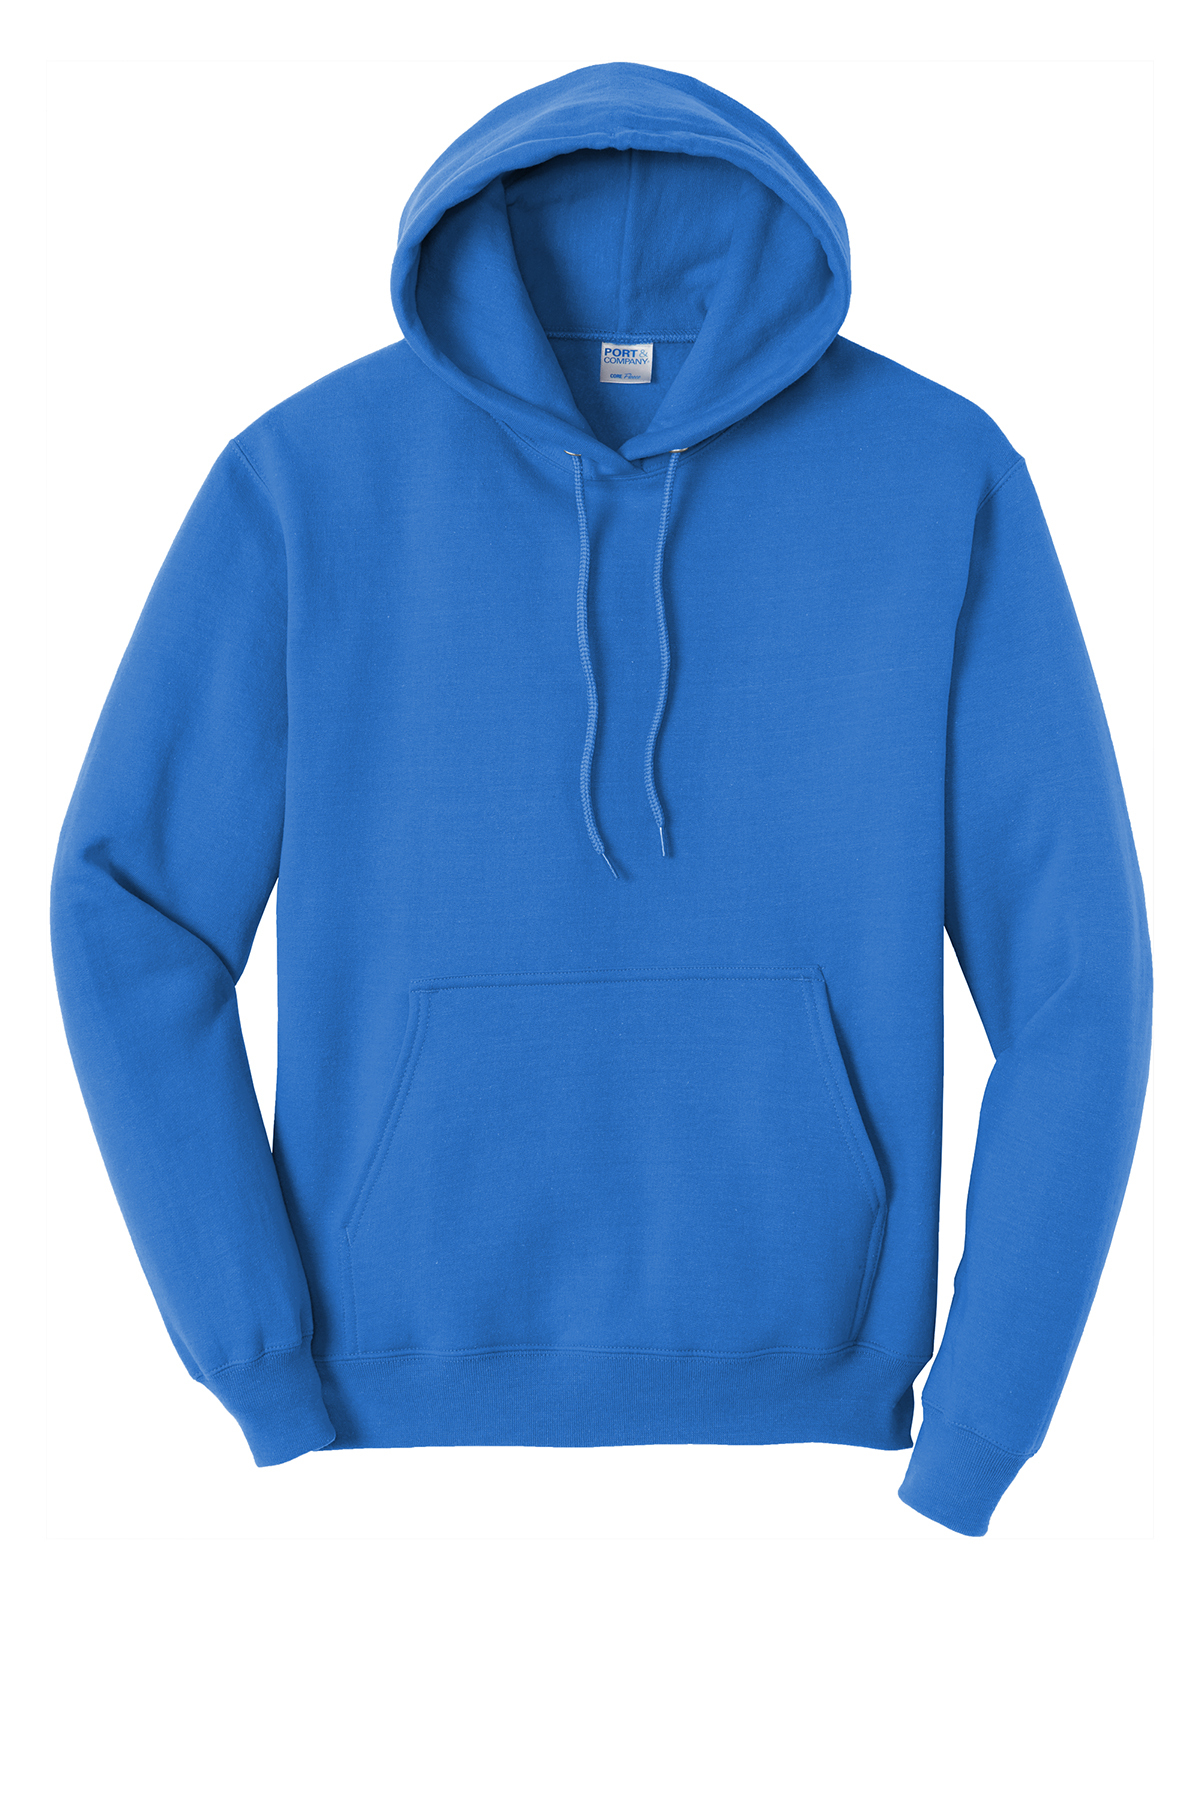 Port & Company ® PC78HT - Tall Core Fleece Pullover Hooded Sweatshirt